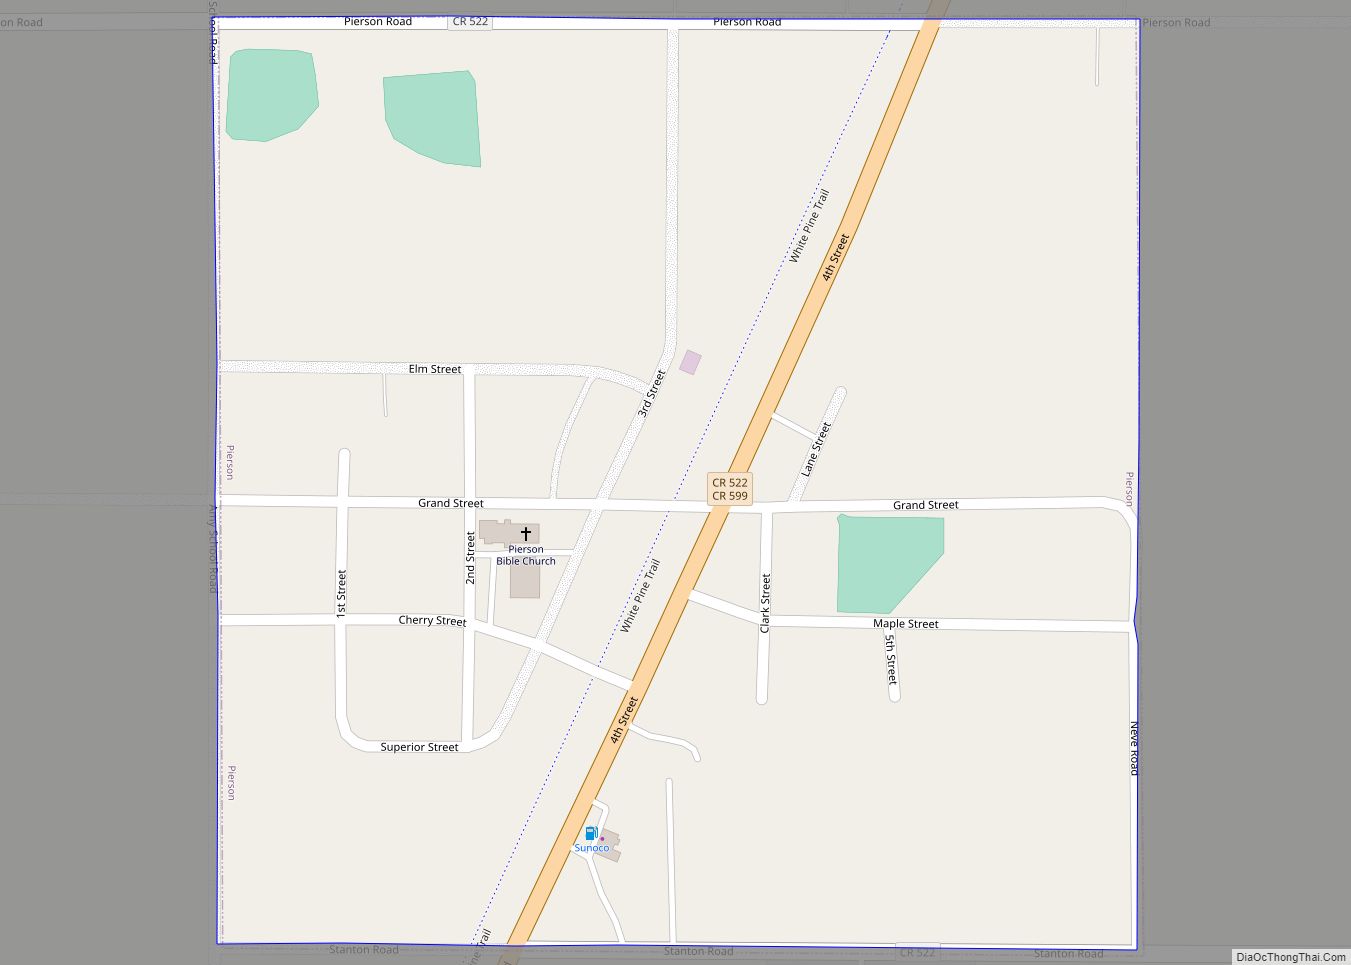 Map of Pierson village, Michigan